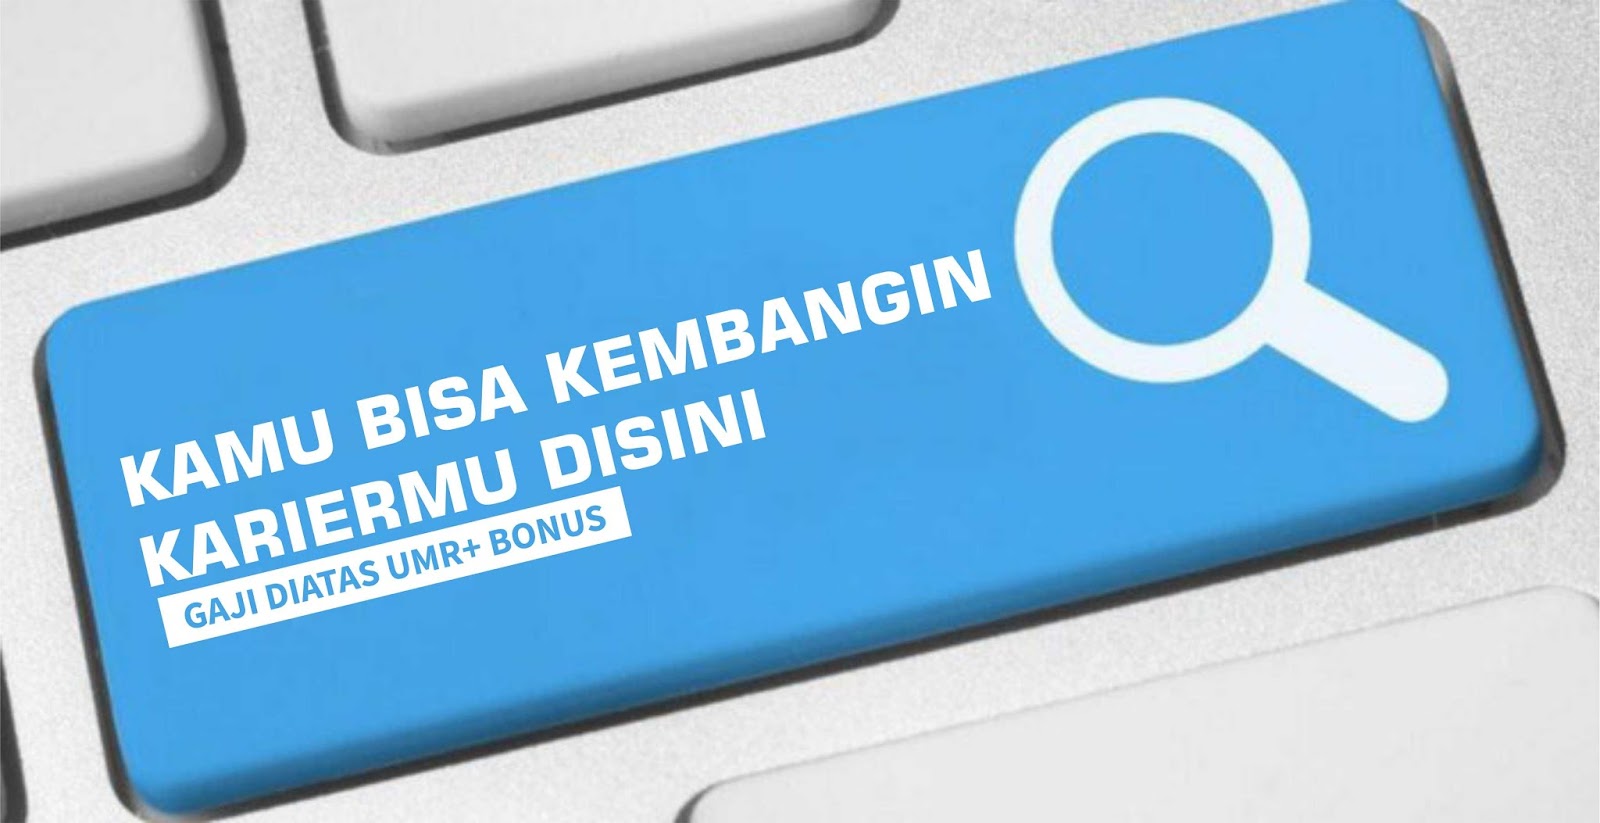 Lowongan Customer Service Online Shop - Lowongan Kerja Jakarta